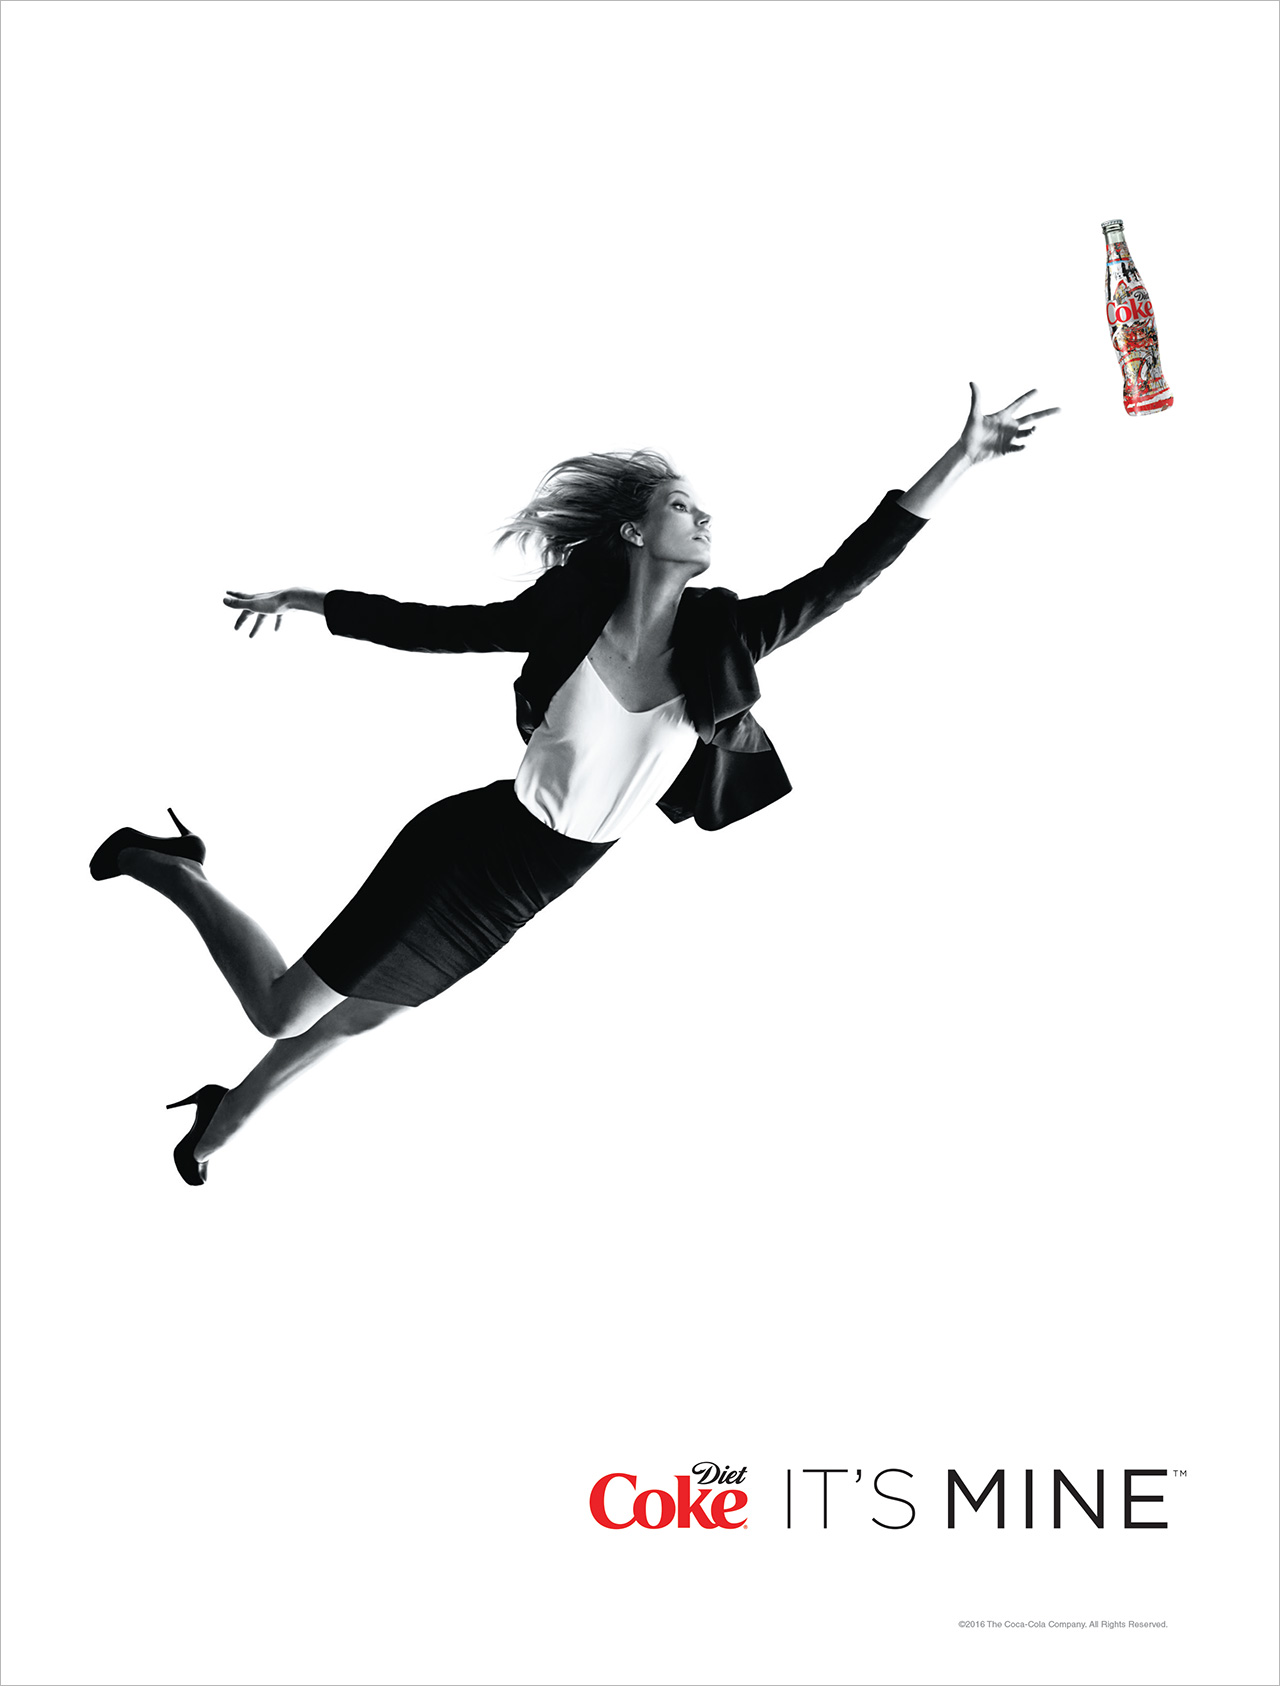 Diet Coke Prints Literally Millions of Unique Labels for New 'It's Mine'  Campaign